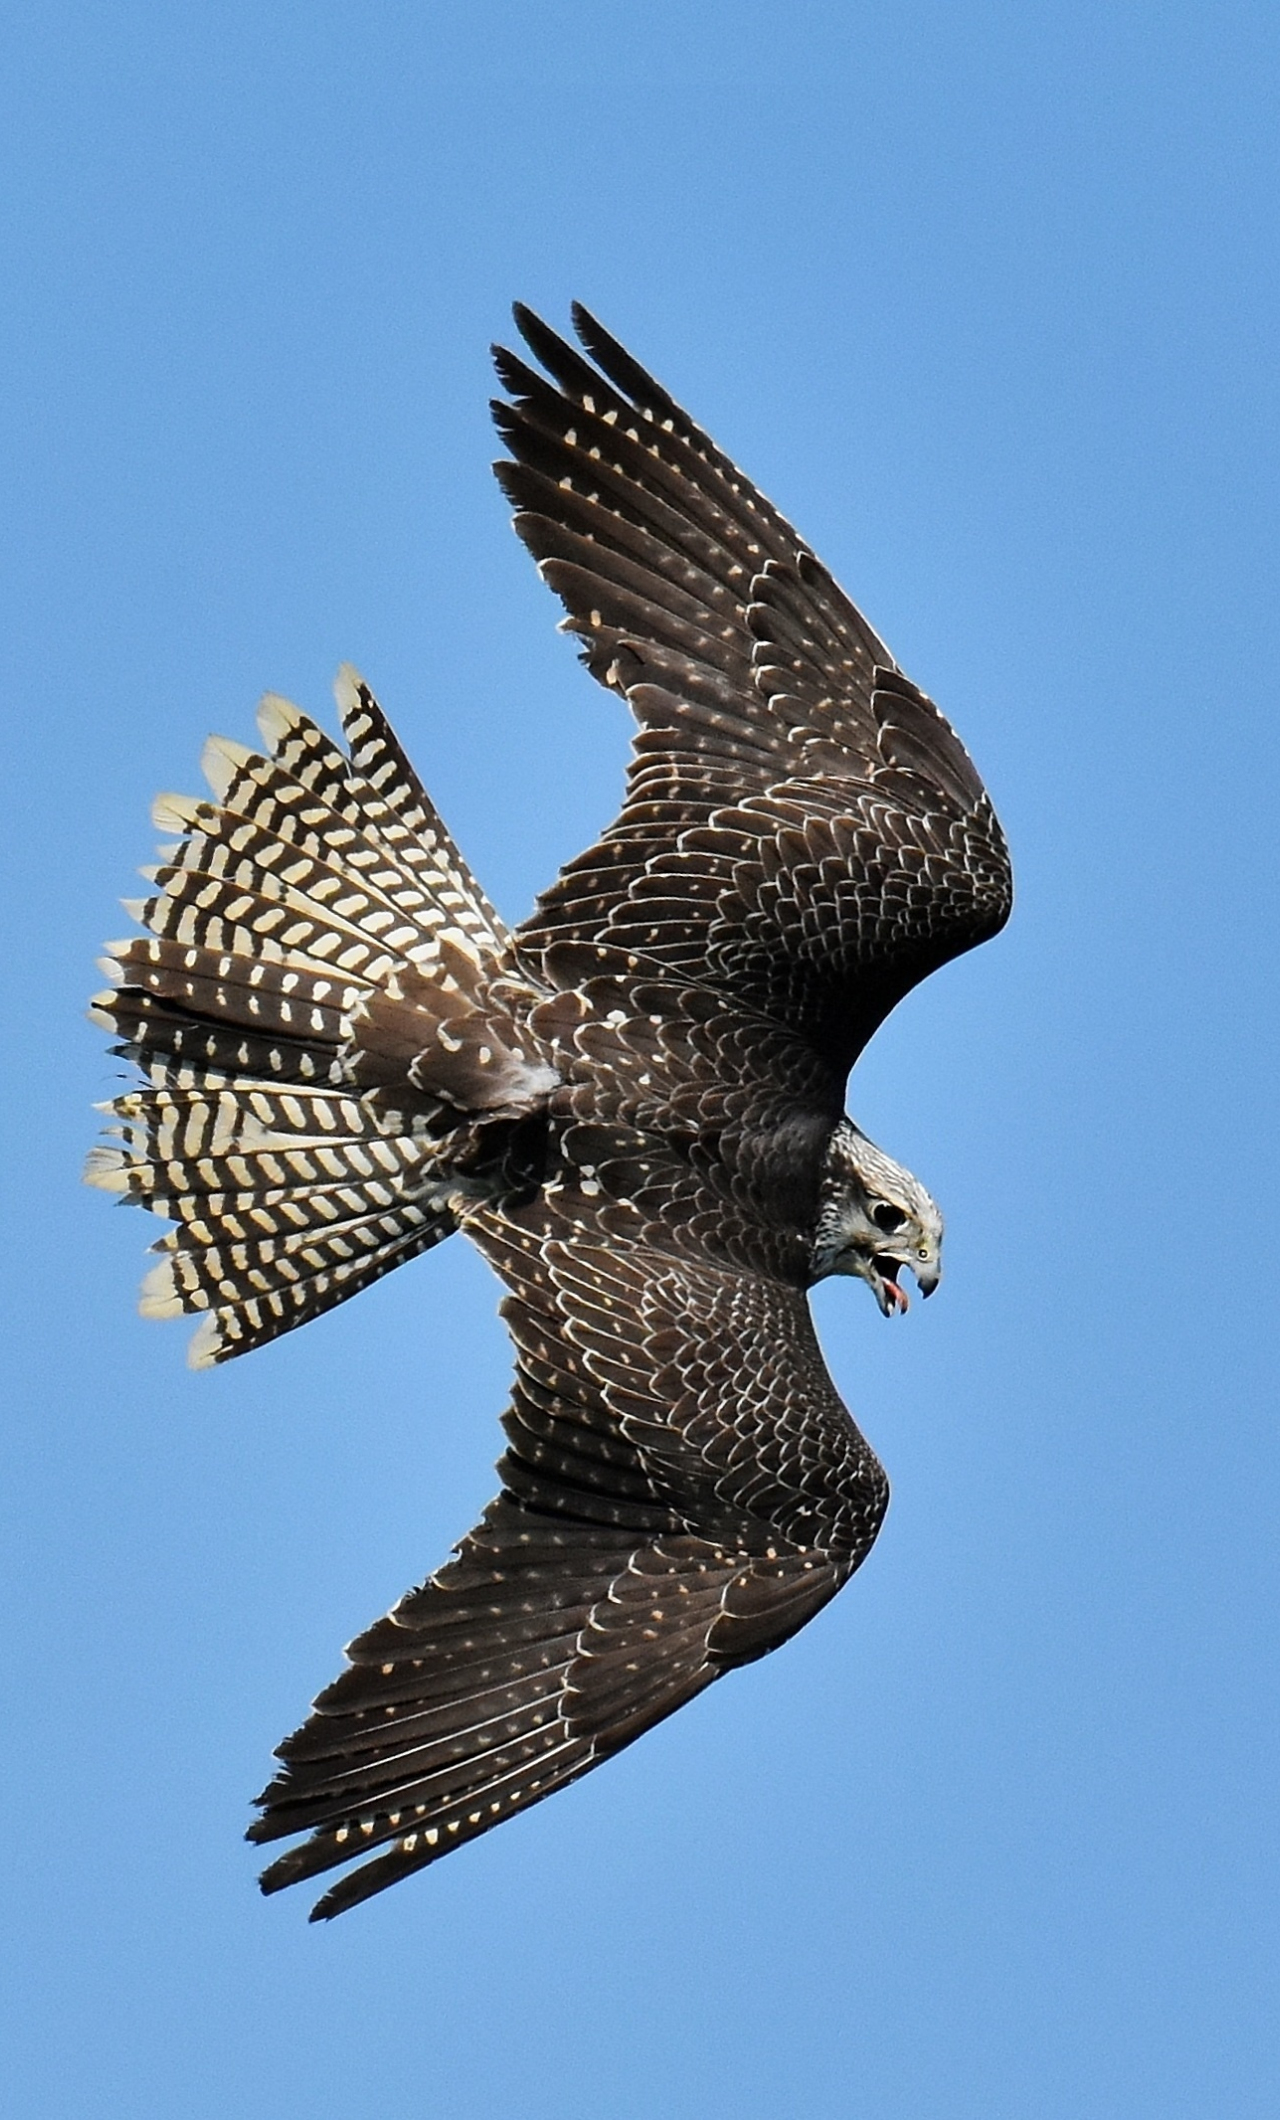 Download Predator Bird Eagle Falcon 1280x21 Wallpaper Iphone 6 Plus 1280x21 Hd Image Background 7114